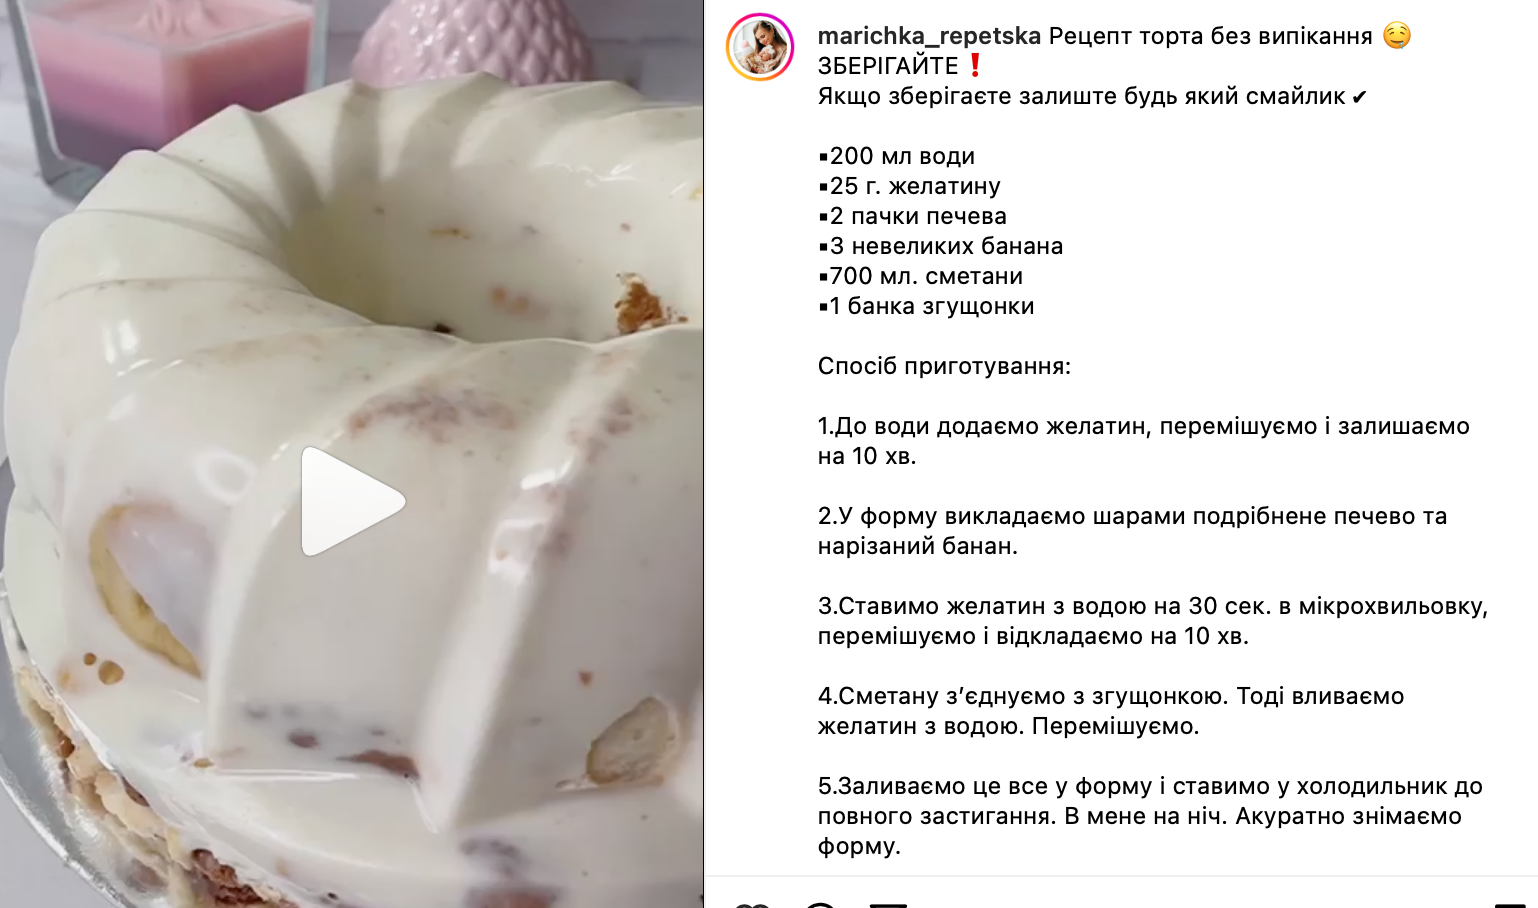 Cake recipe